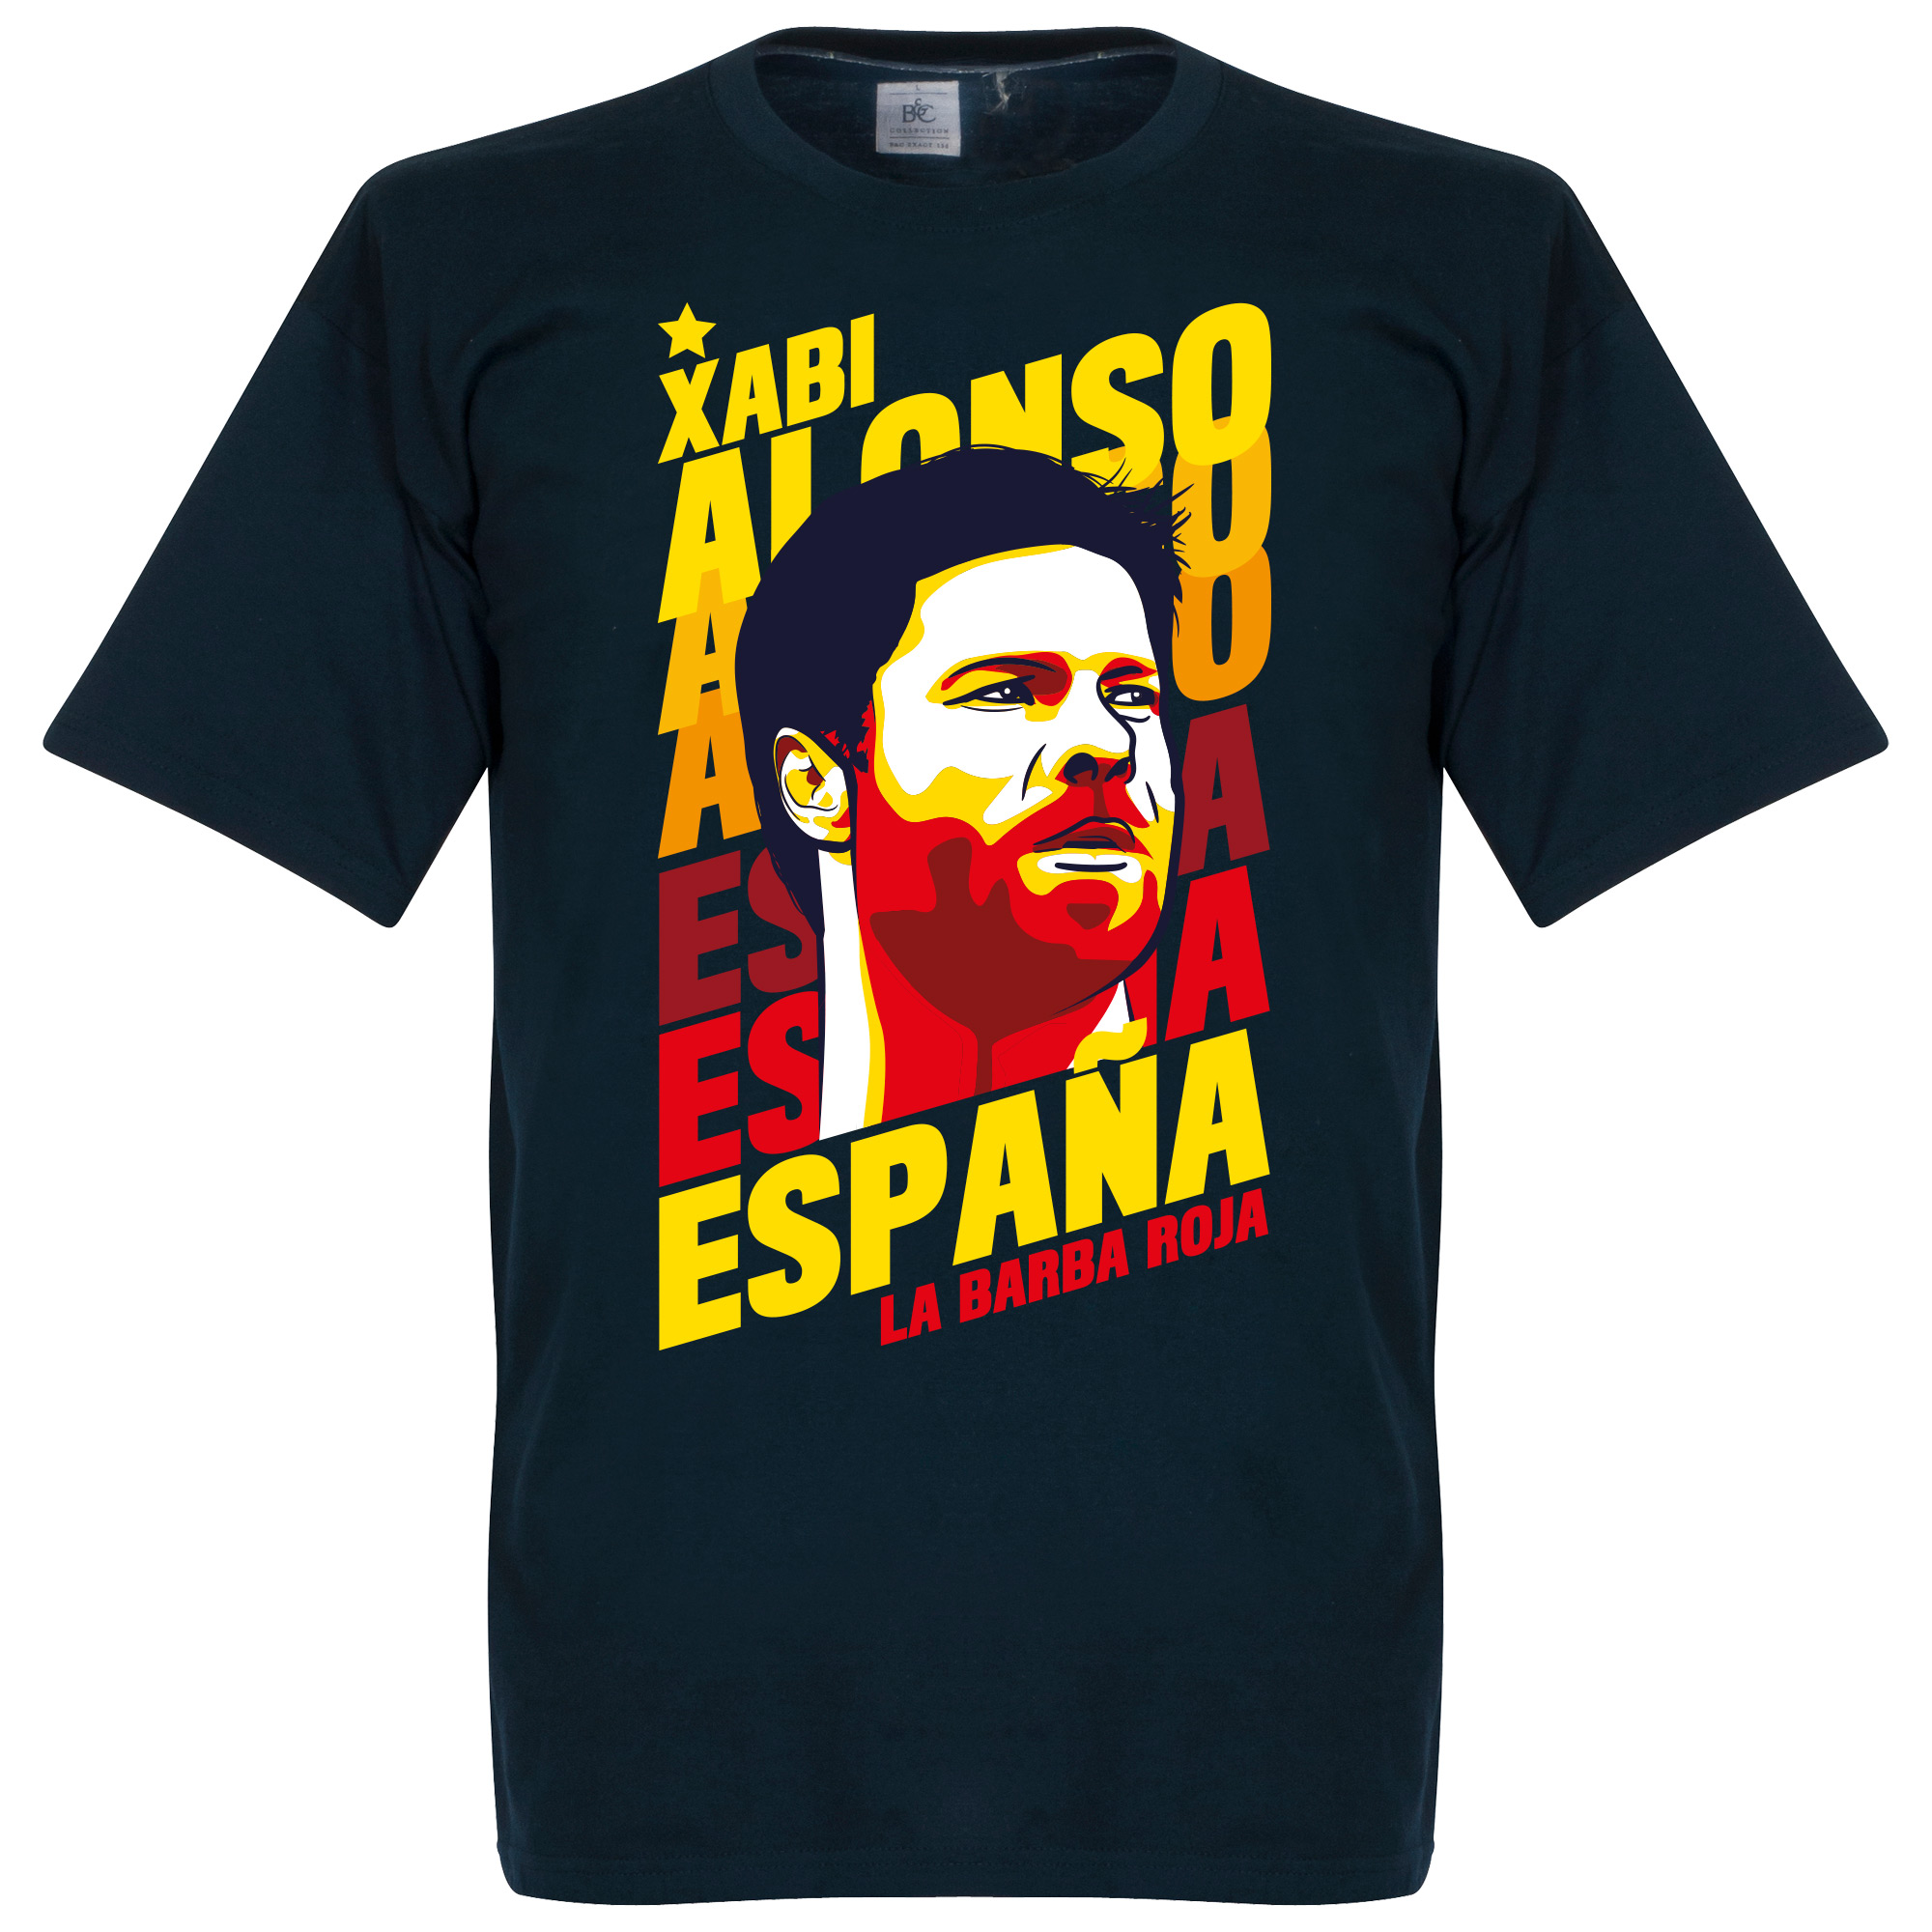 Xabi Alonso Portrait T-Shirt Top Merken Winkel